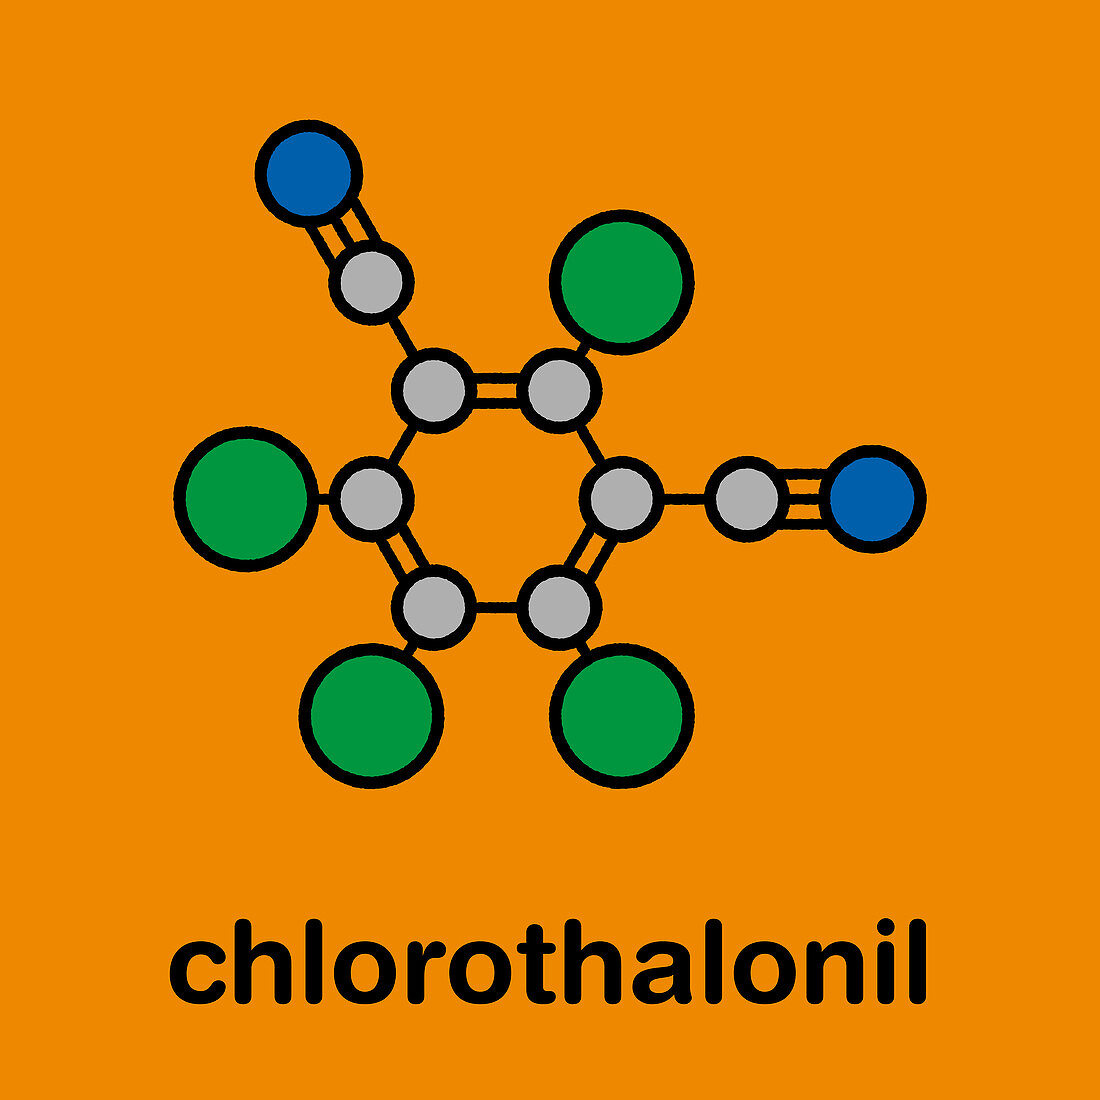 Chlorothalonil pesticide molecule, illustration